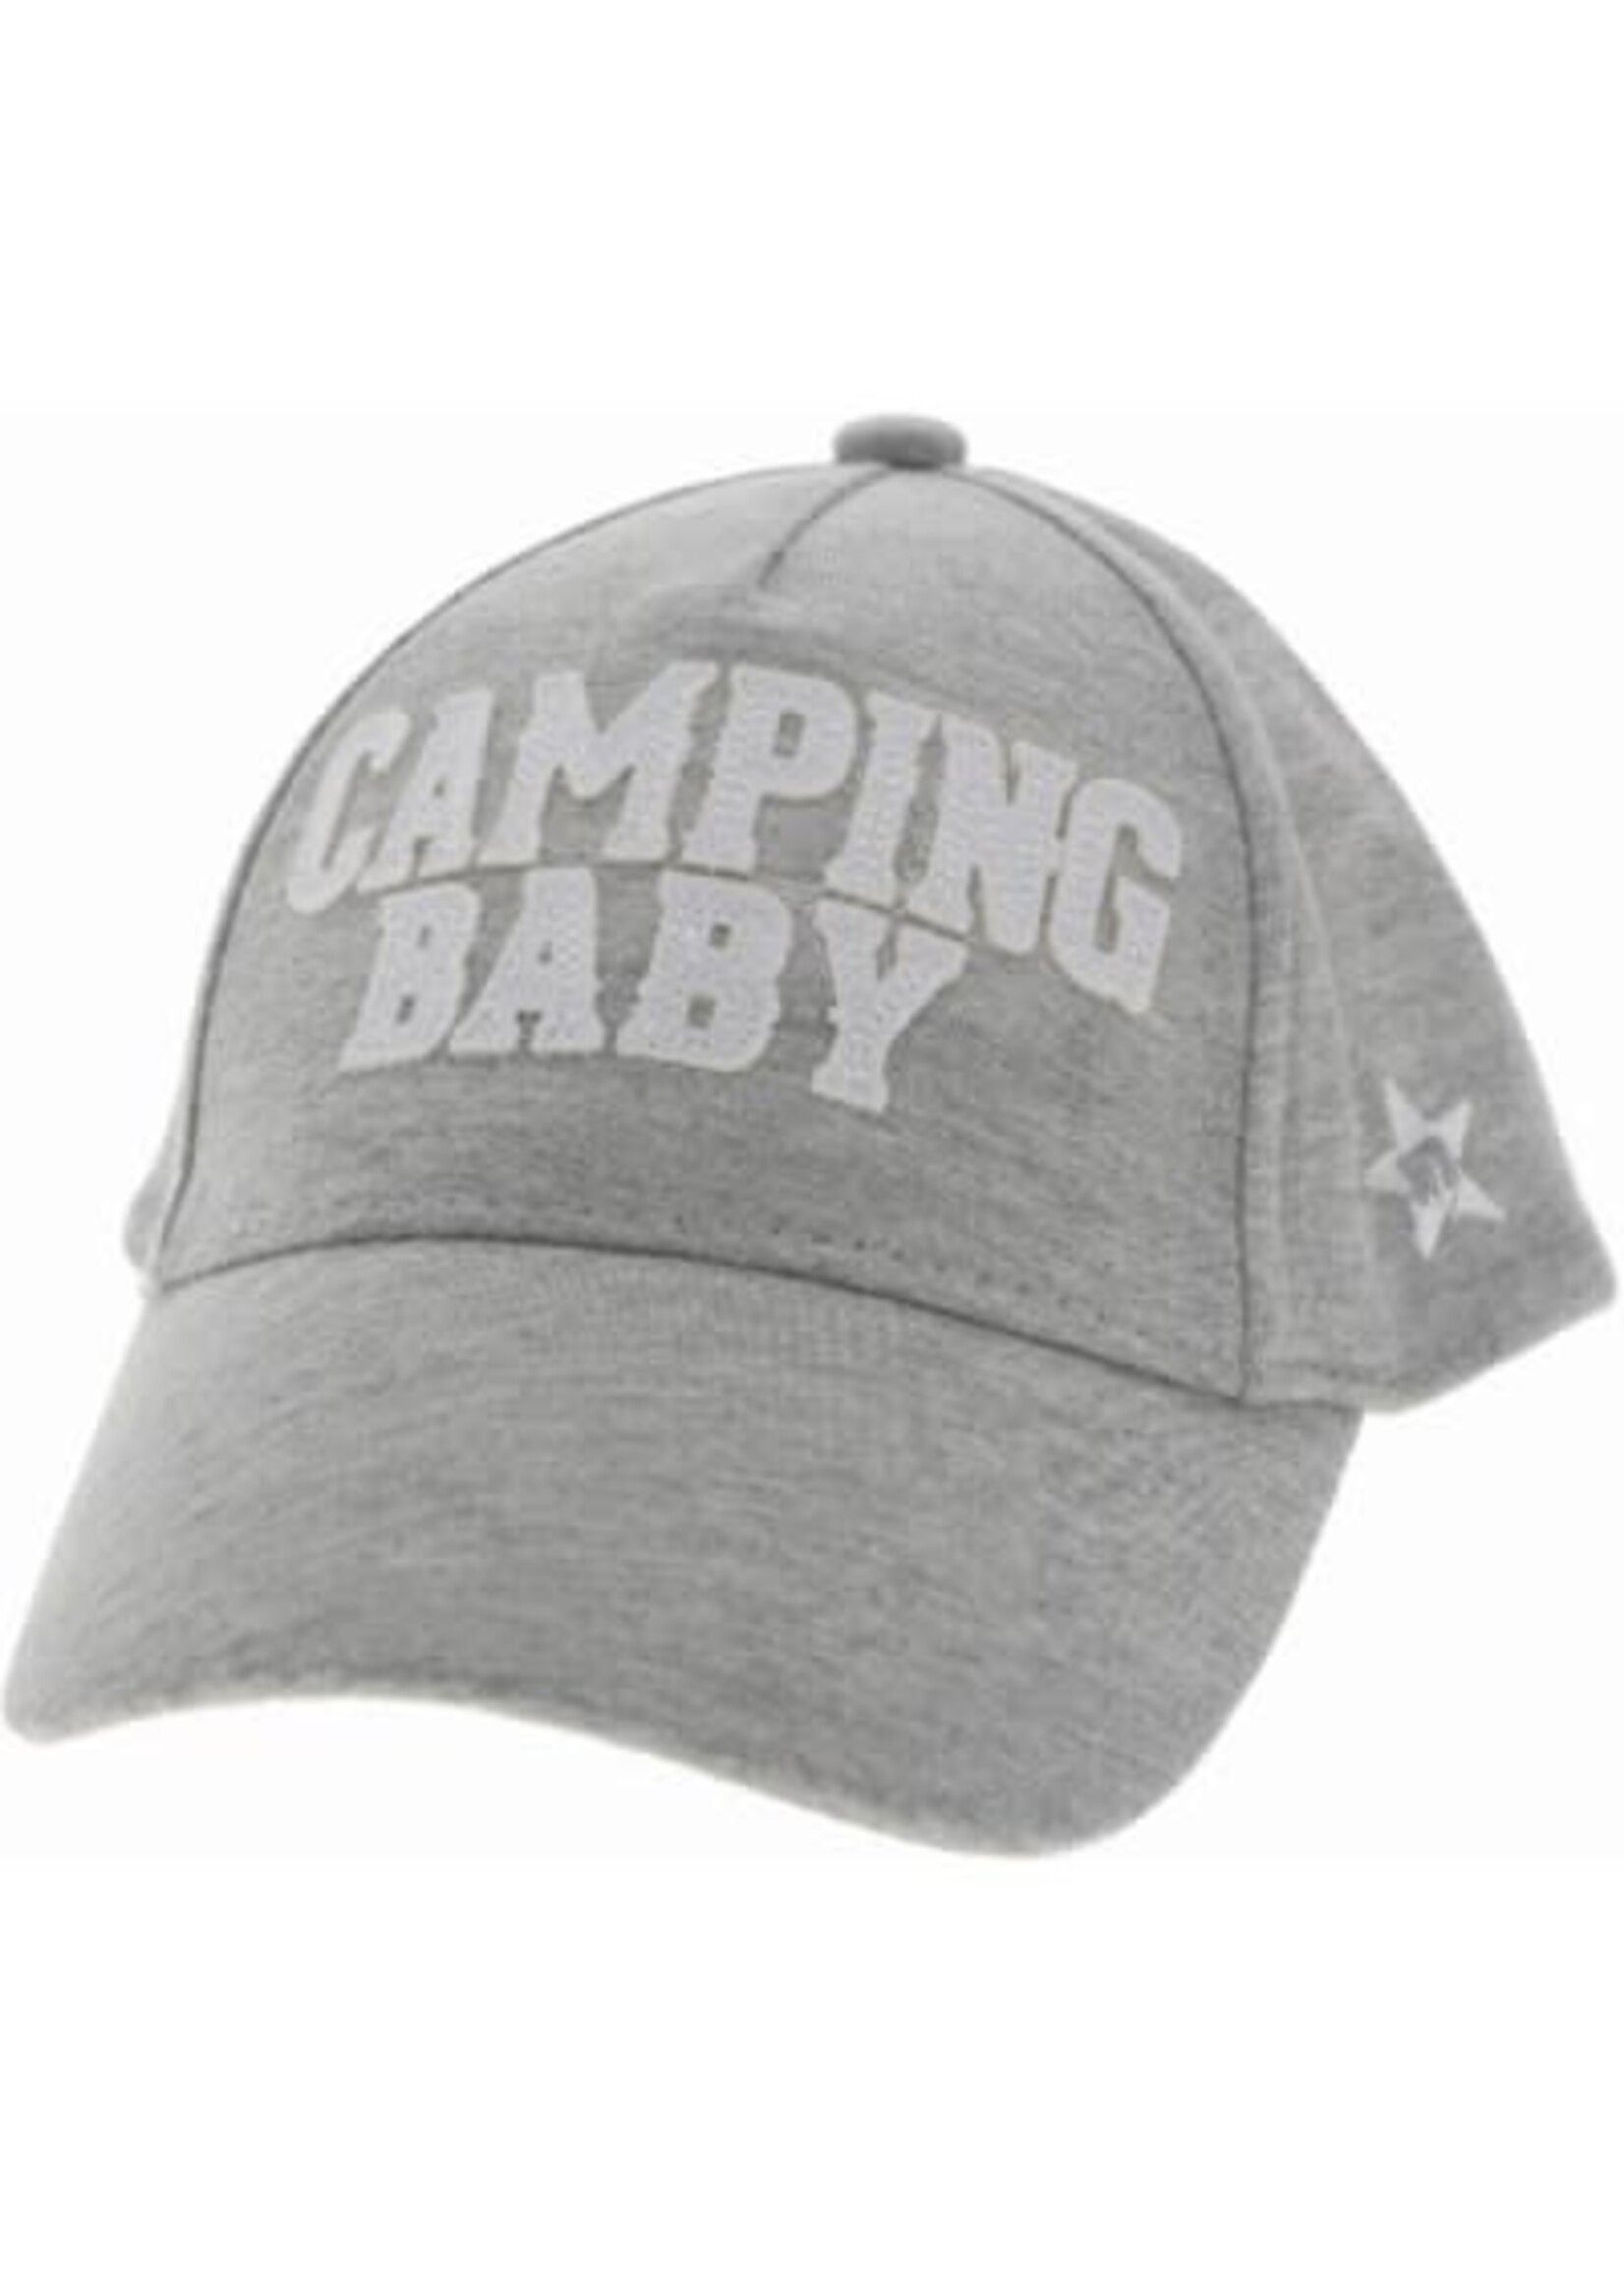 We People We Baby Camping Hat- Grey